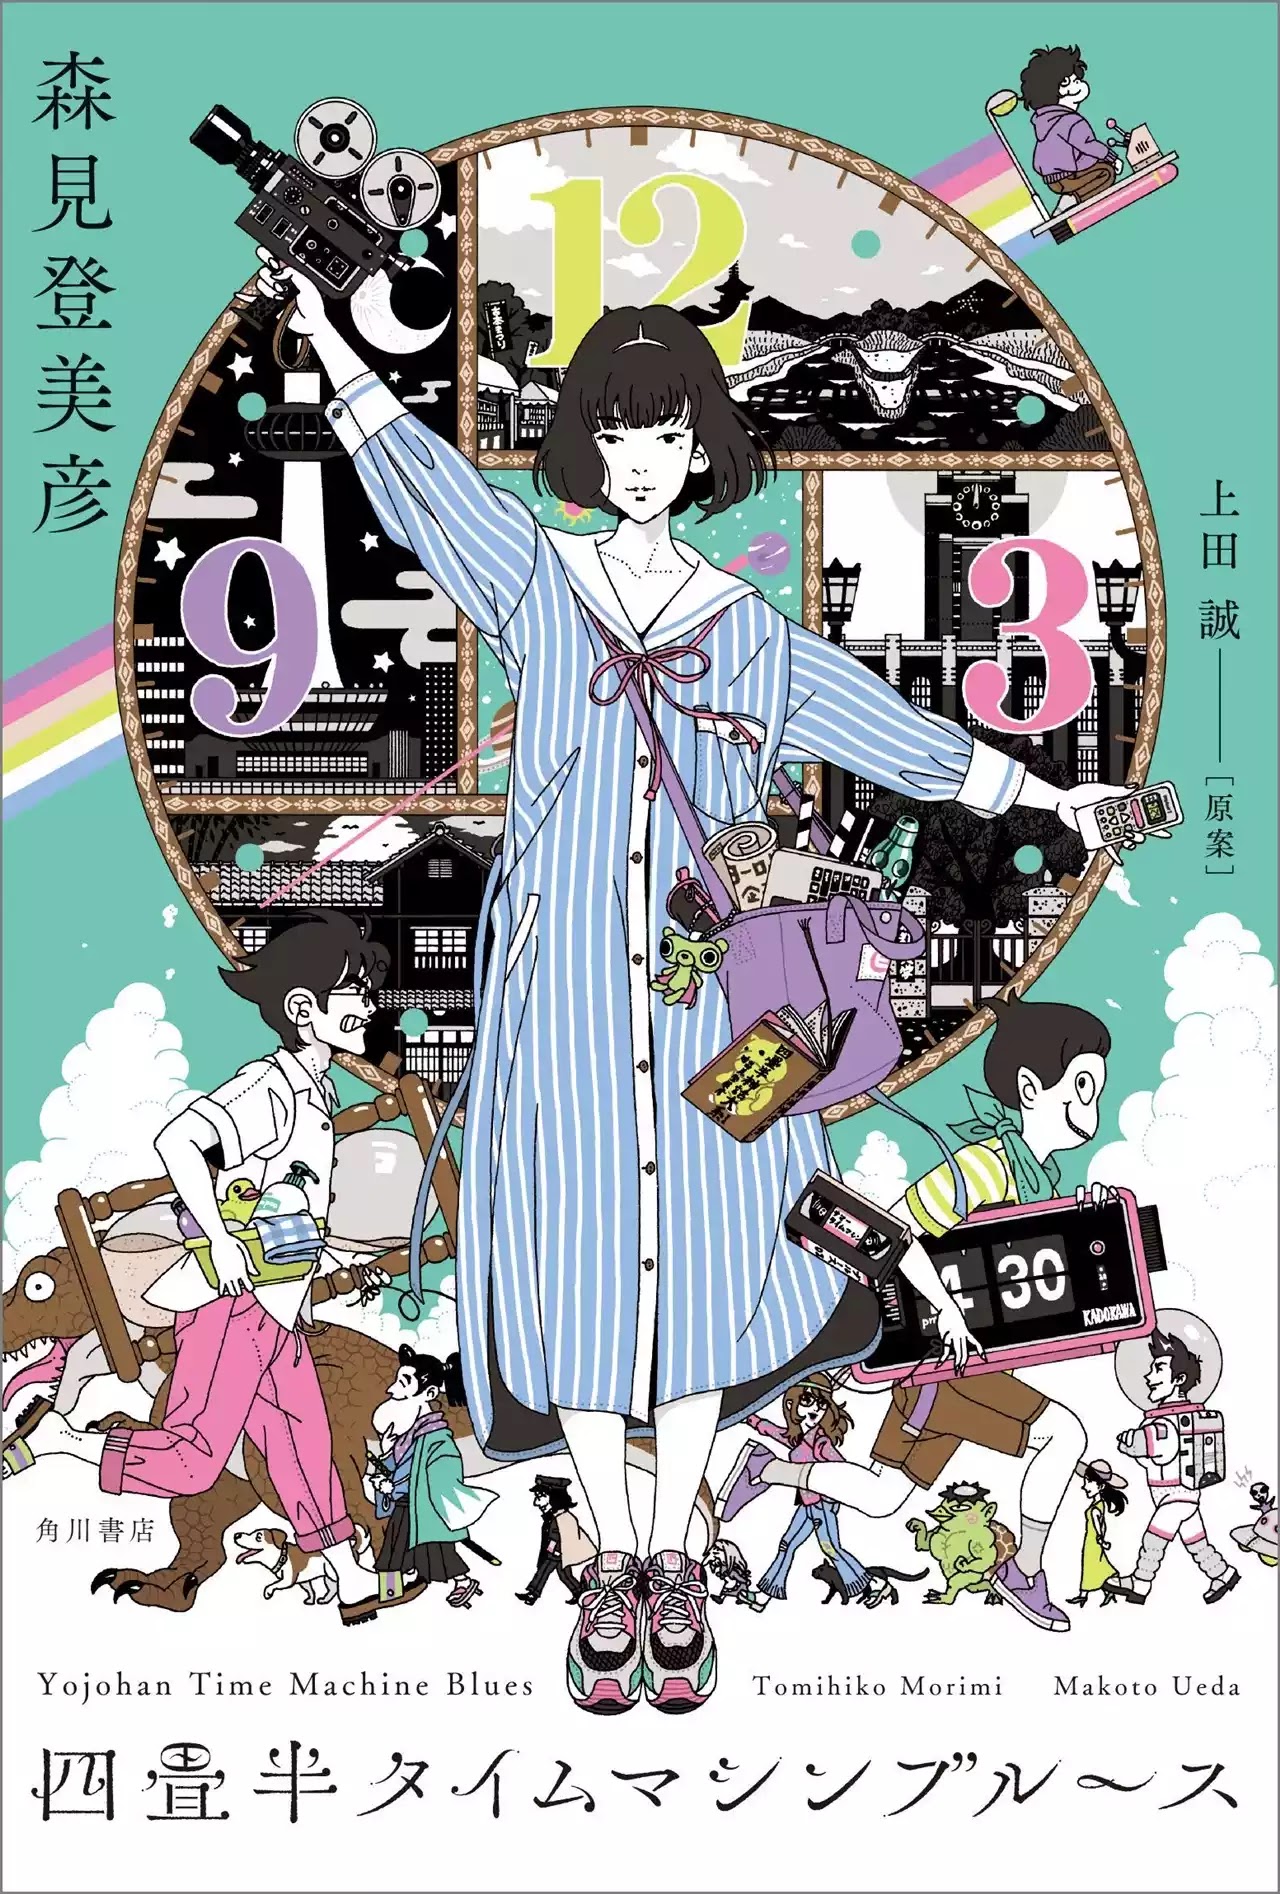 O Anime Yojouhan Time Machine Blues Vai Estrear em Setembro